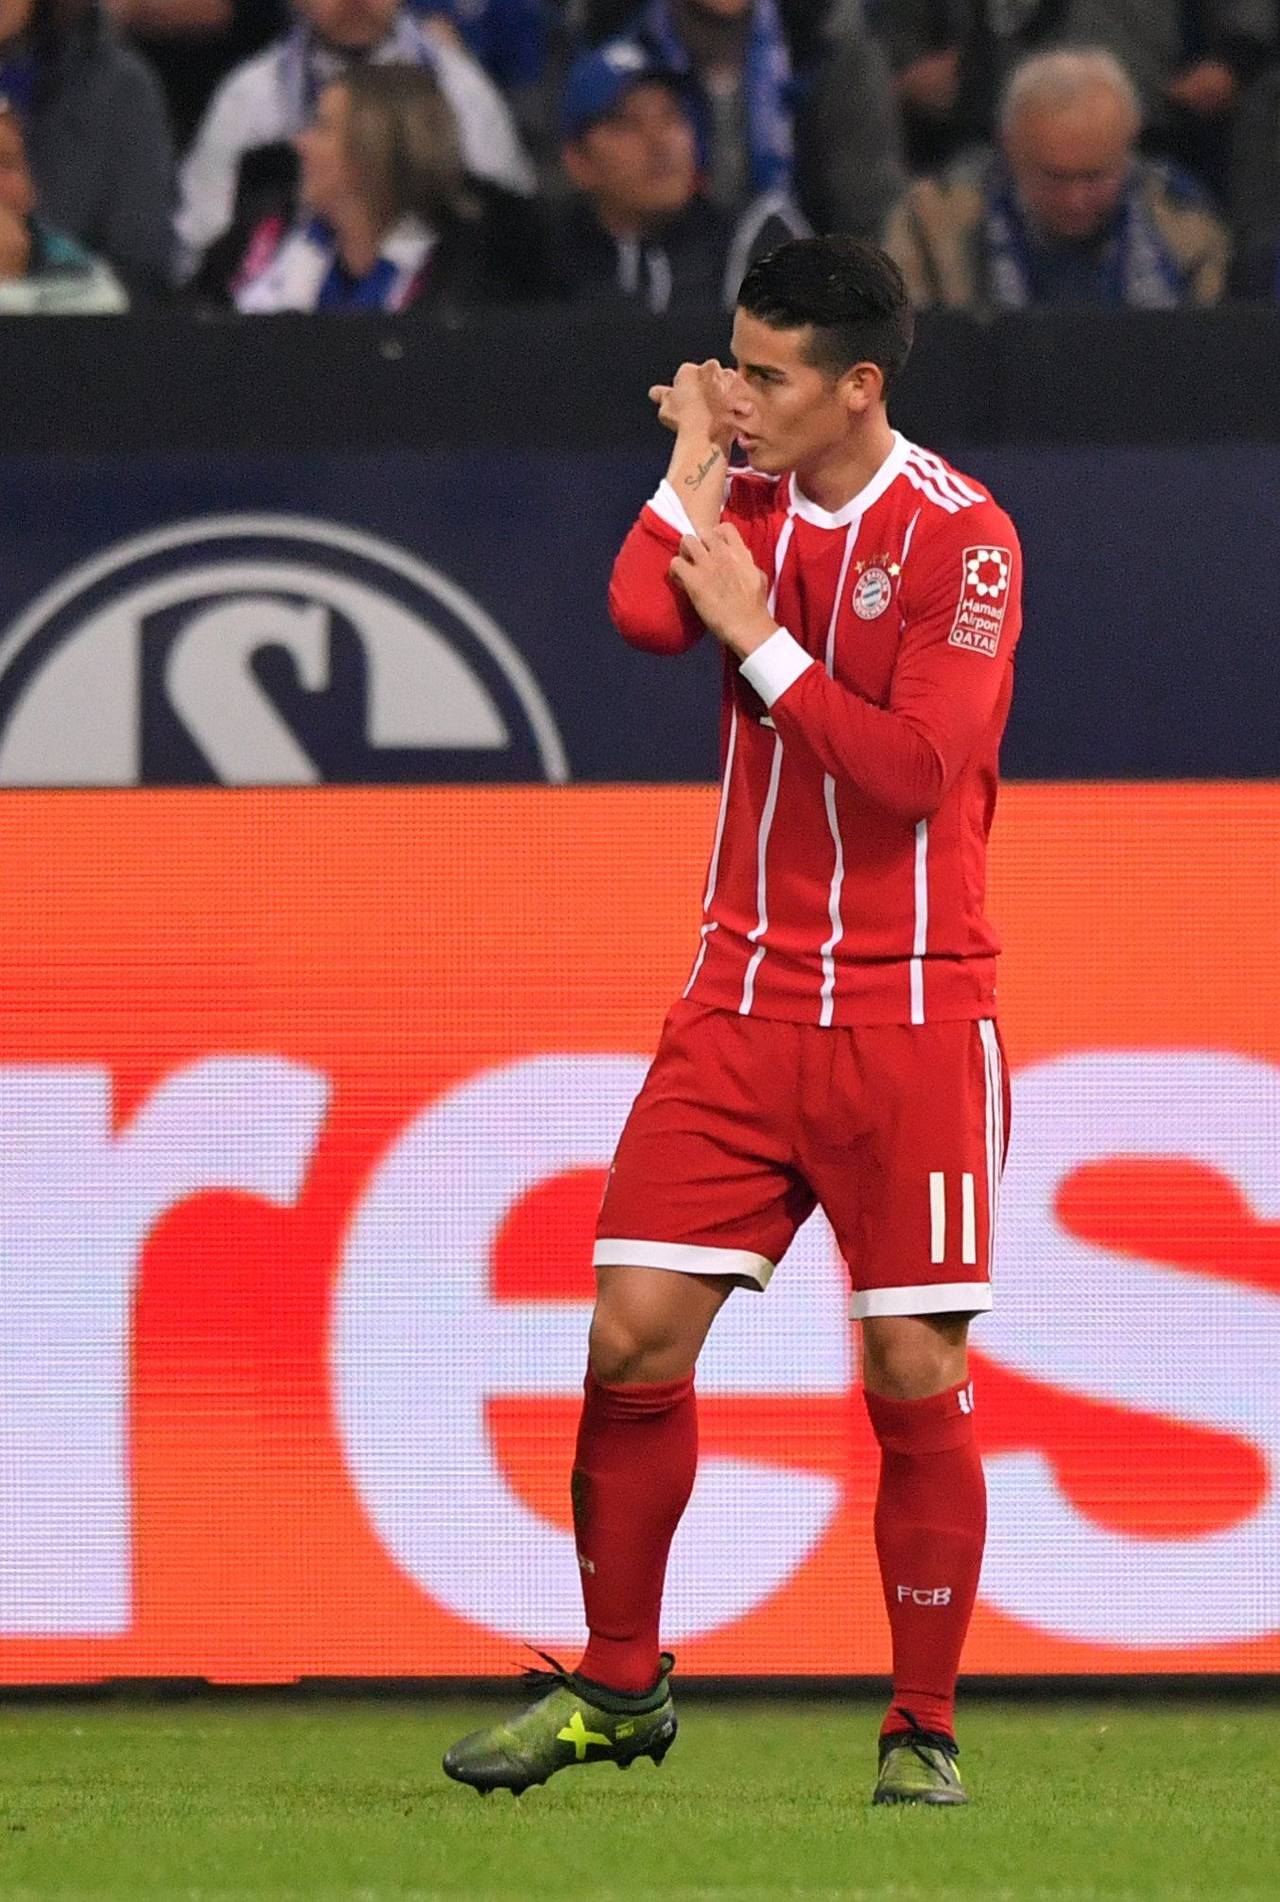 James Rodríguez, de Bayern, celebra luego de anotar un gol contra Schalke, durante un partido de la Bundesliga. (EFE)